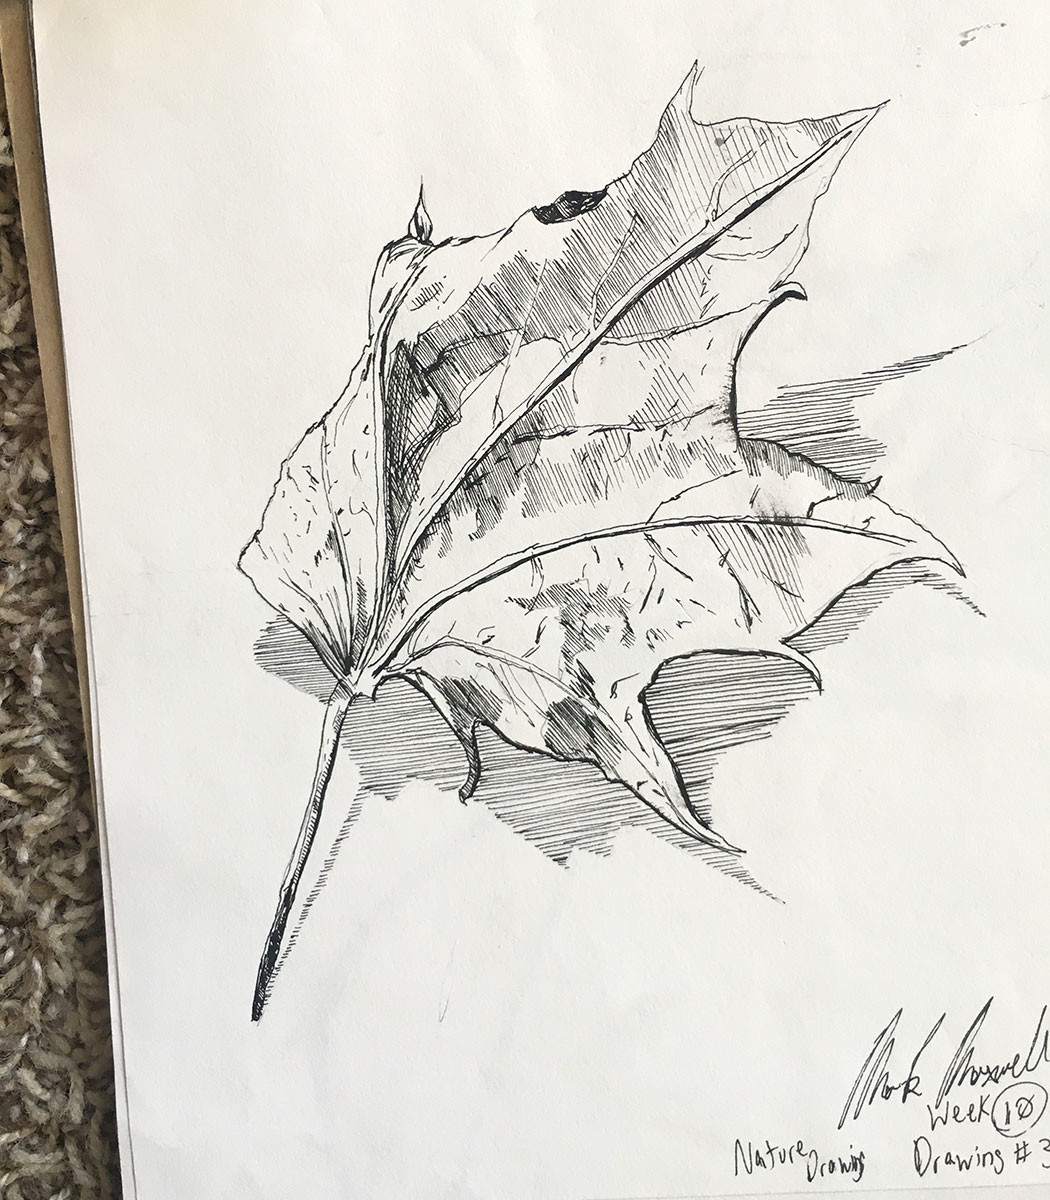 8" x 10" sketchbook study of a leaf.